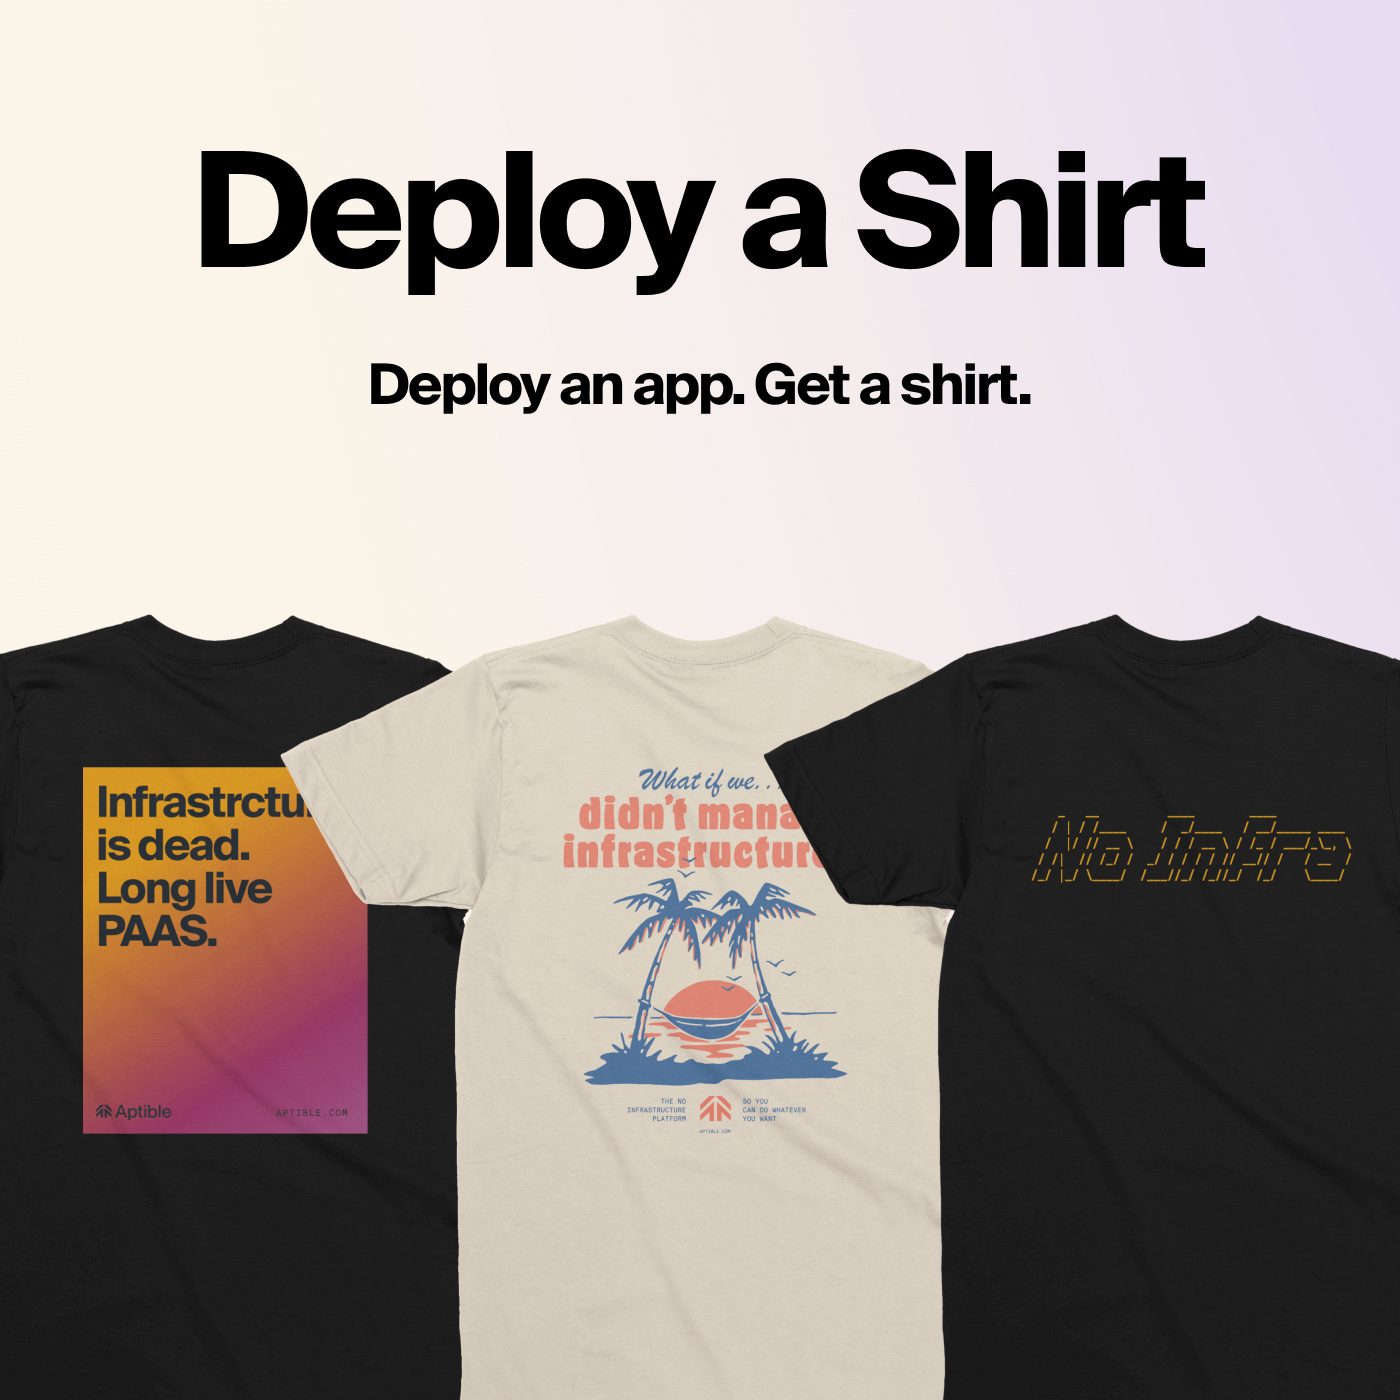 Deploy a Shirt 👕